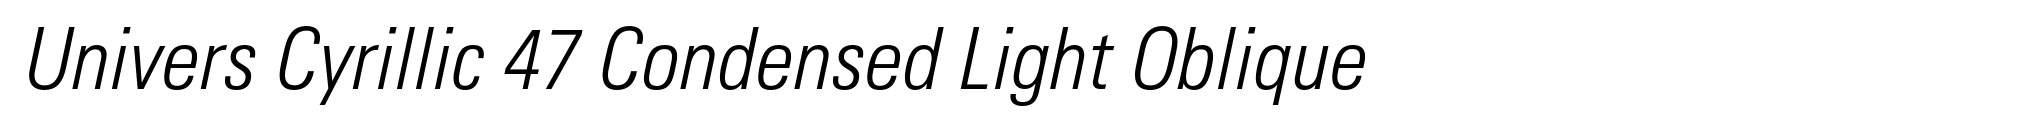 Univers Cyrillic 47 Condensed Light Oblique image